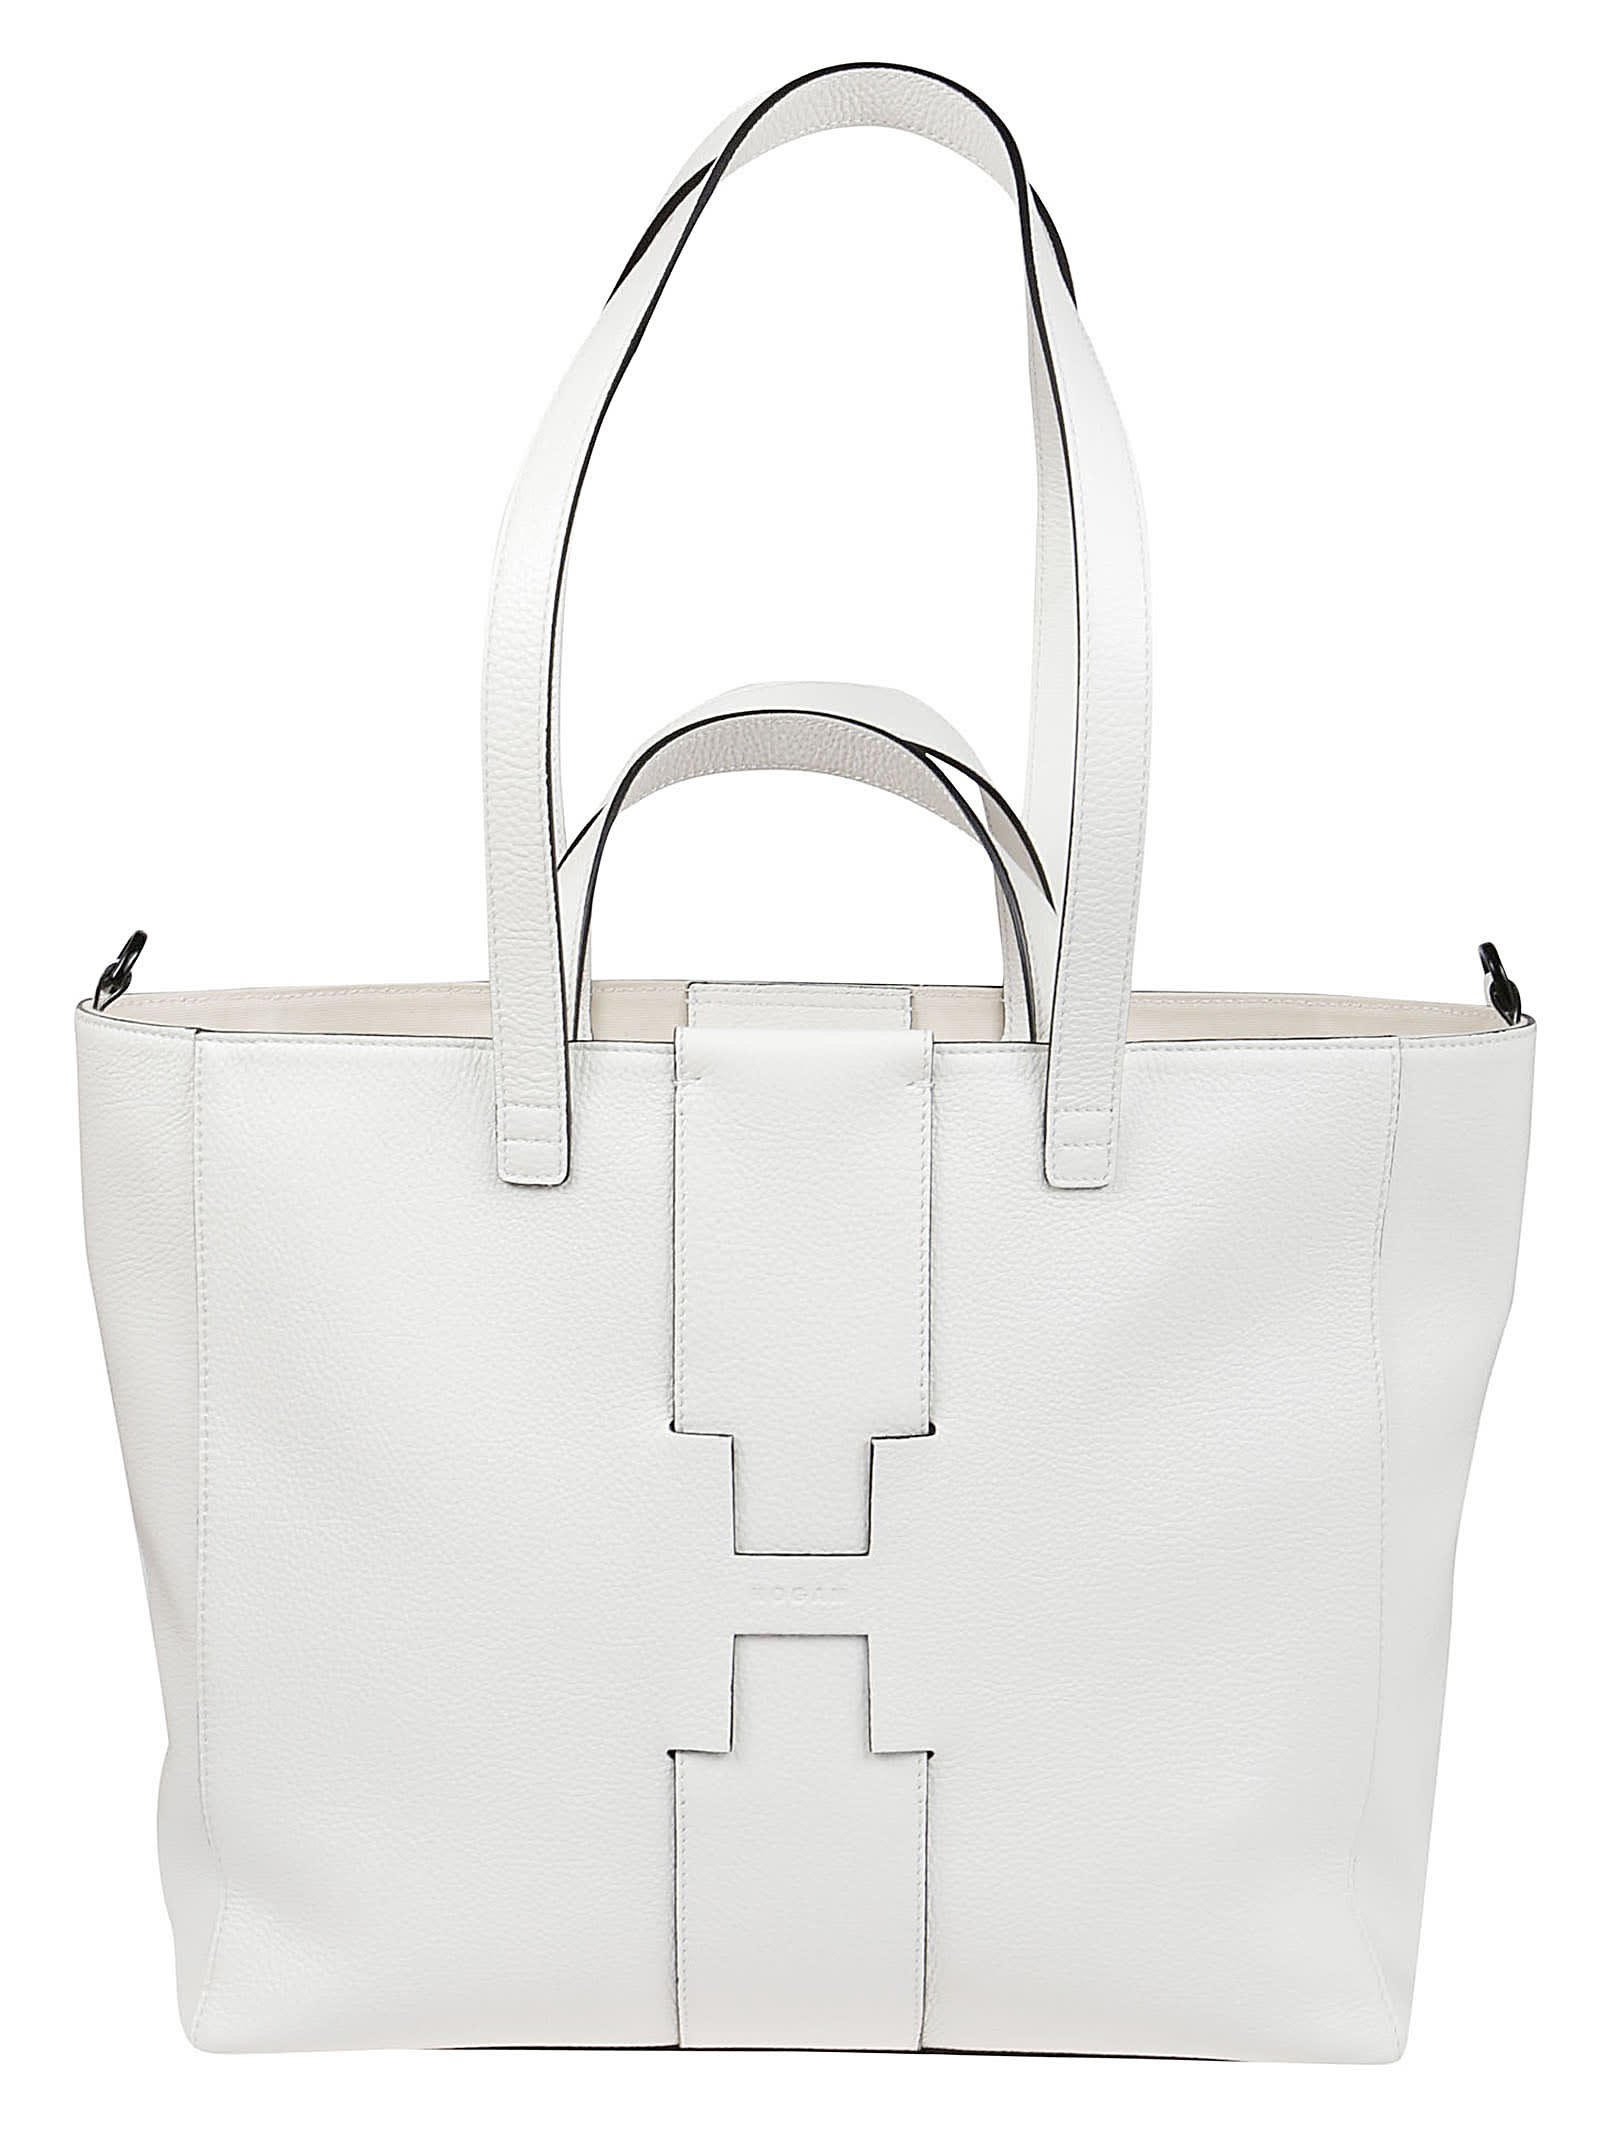 Hogan White Leather Bag